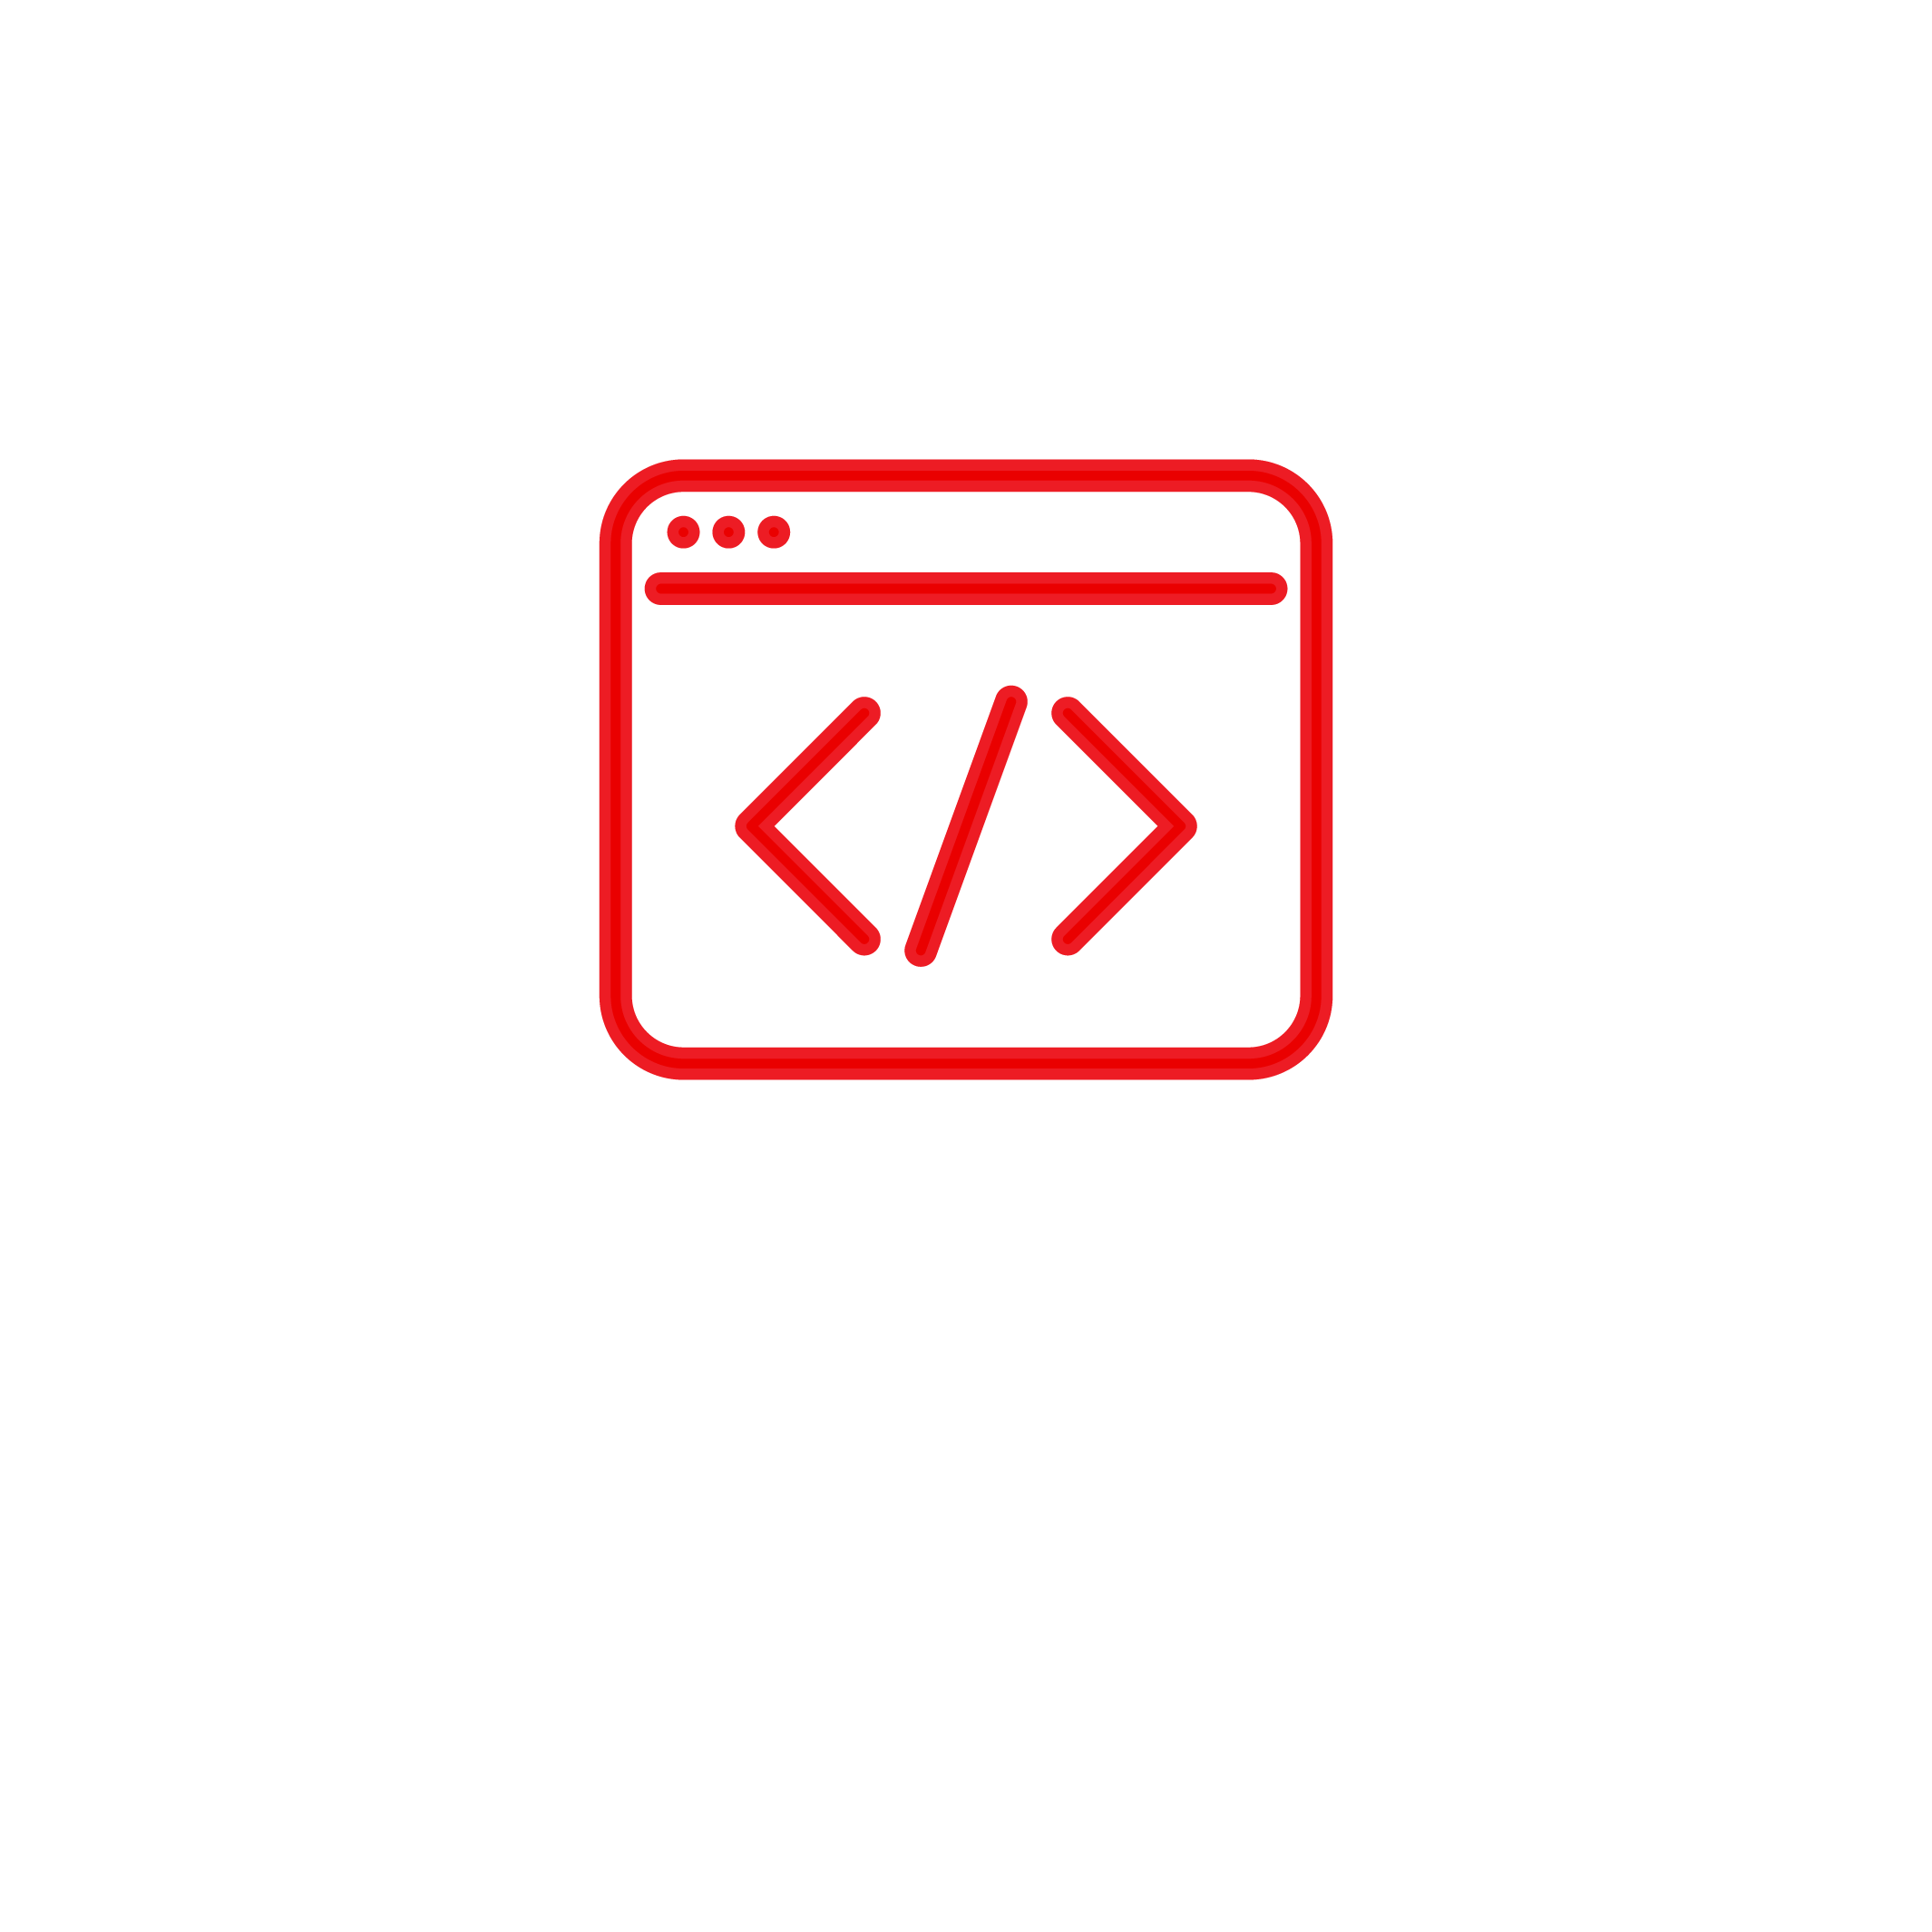 Code Optimization